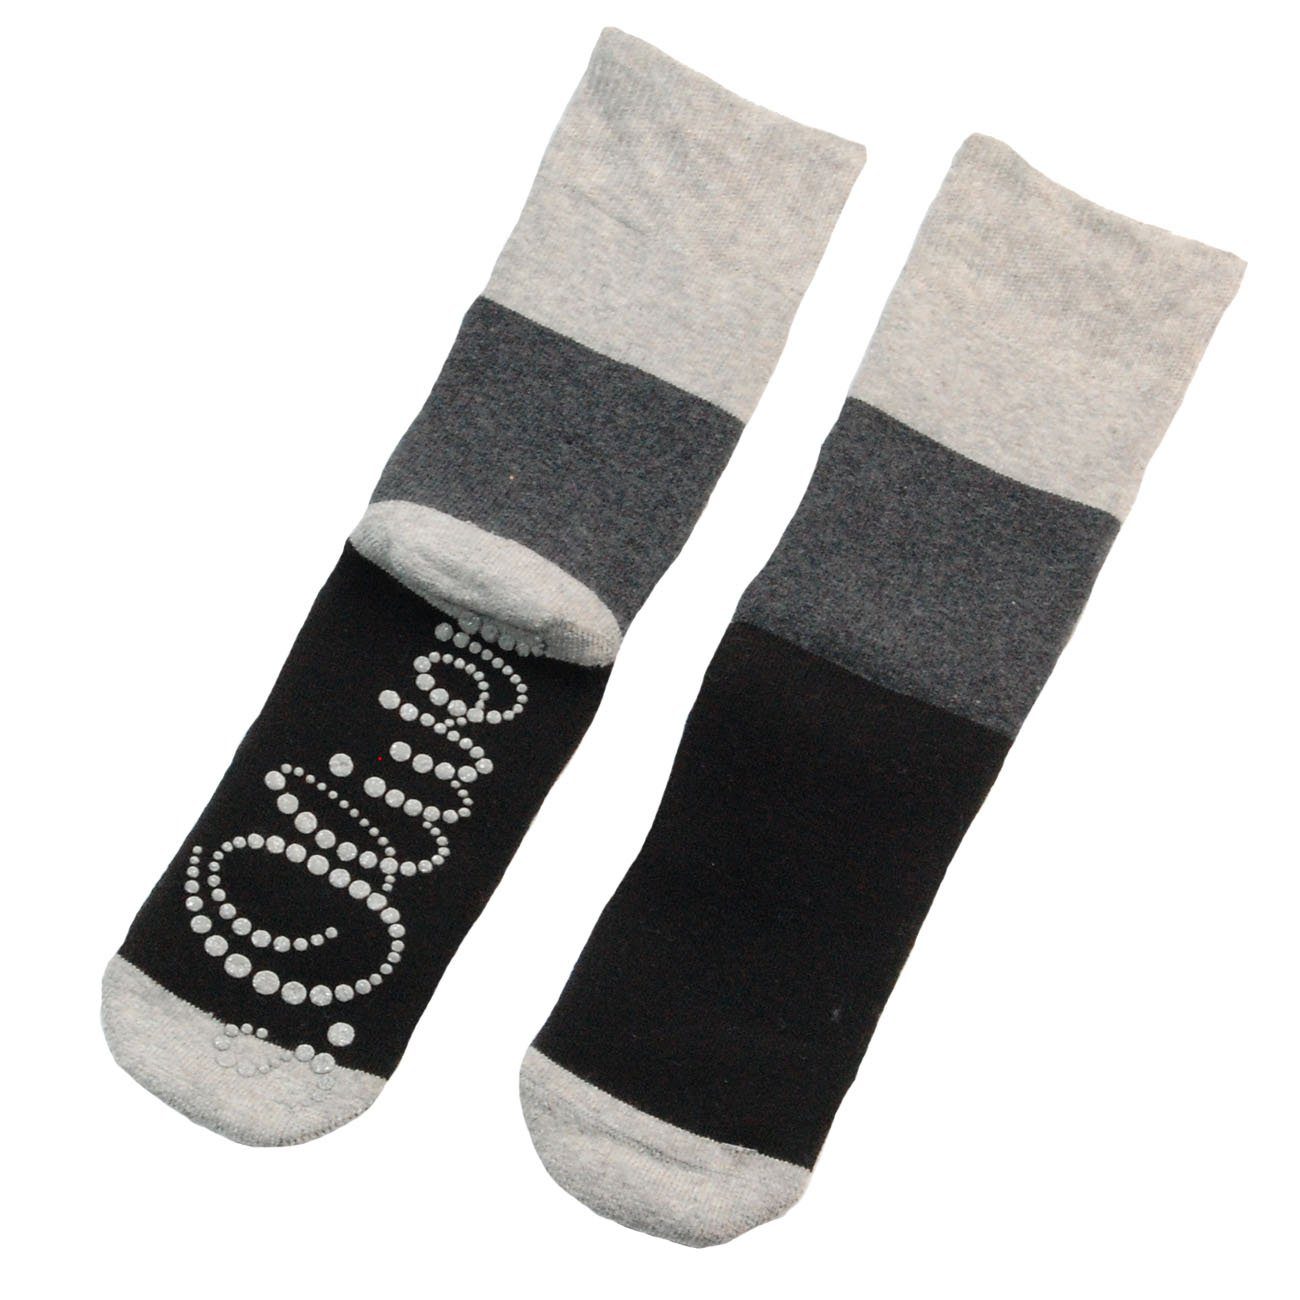 s.Oliver ABS-Socken S20203 (Packung, 1-Paar, 1 Paar) Kinder Socken Jungen Mädchen Baumwolle Kindersocken mit ABS-Noppen 05 black